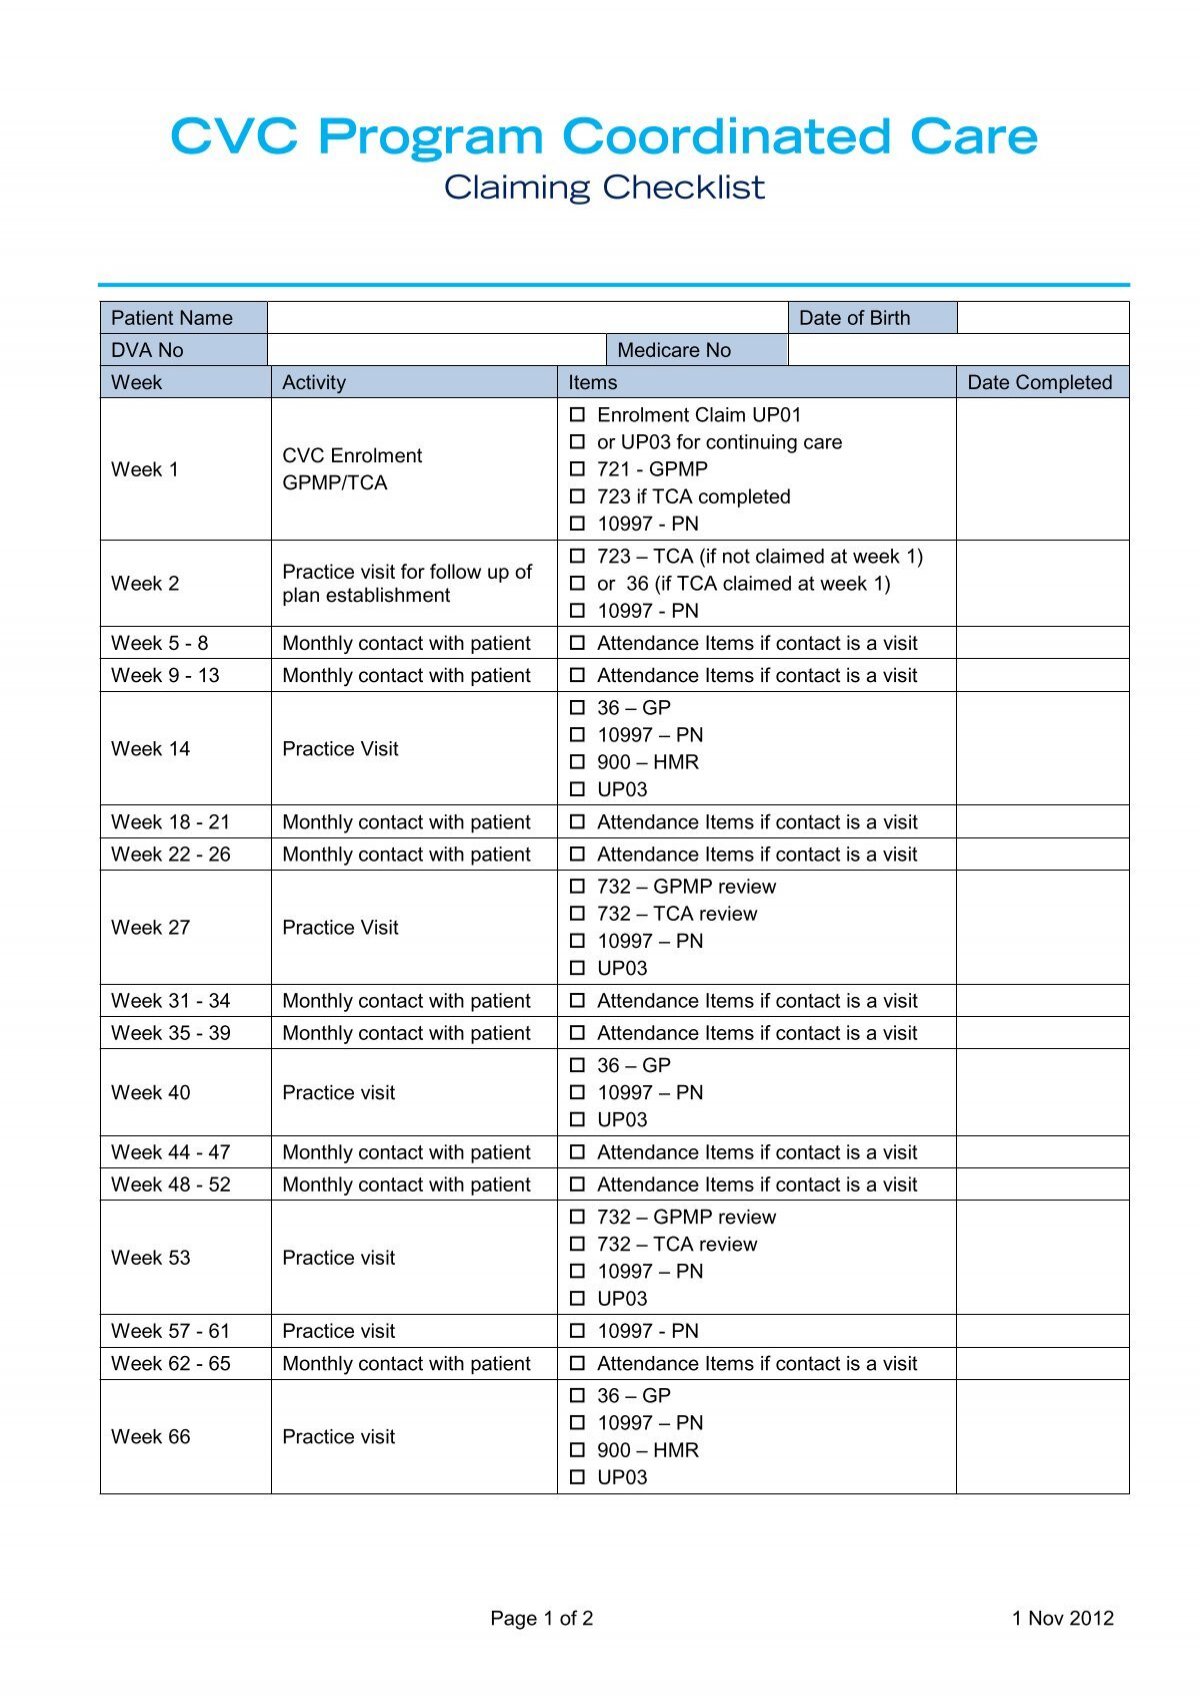 cvc-claiming-checklist-with-medicare-item-no-guide-only-apna